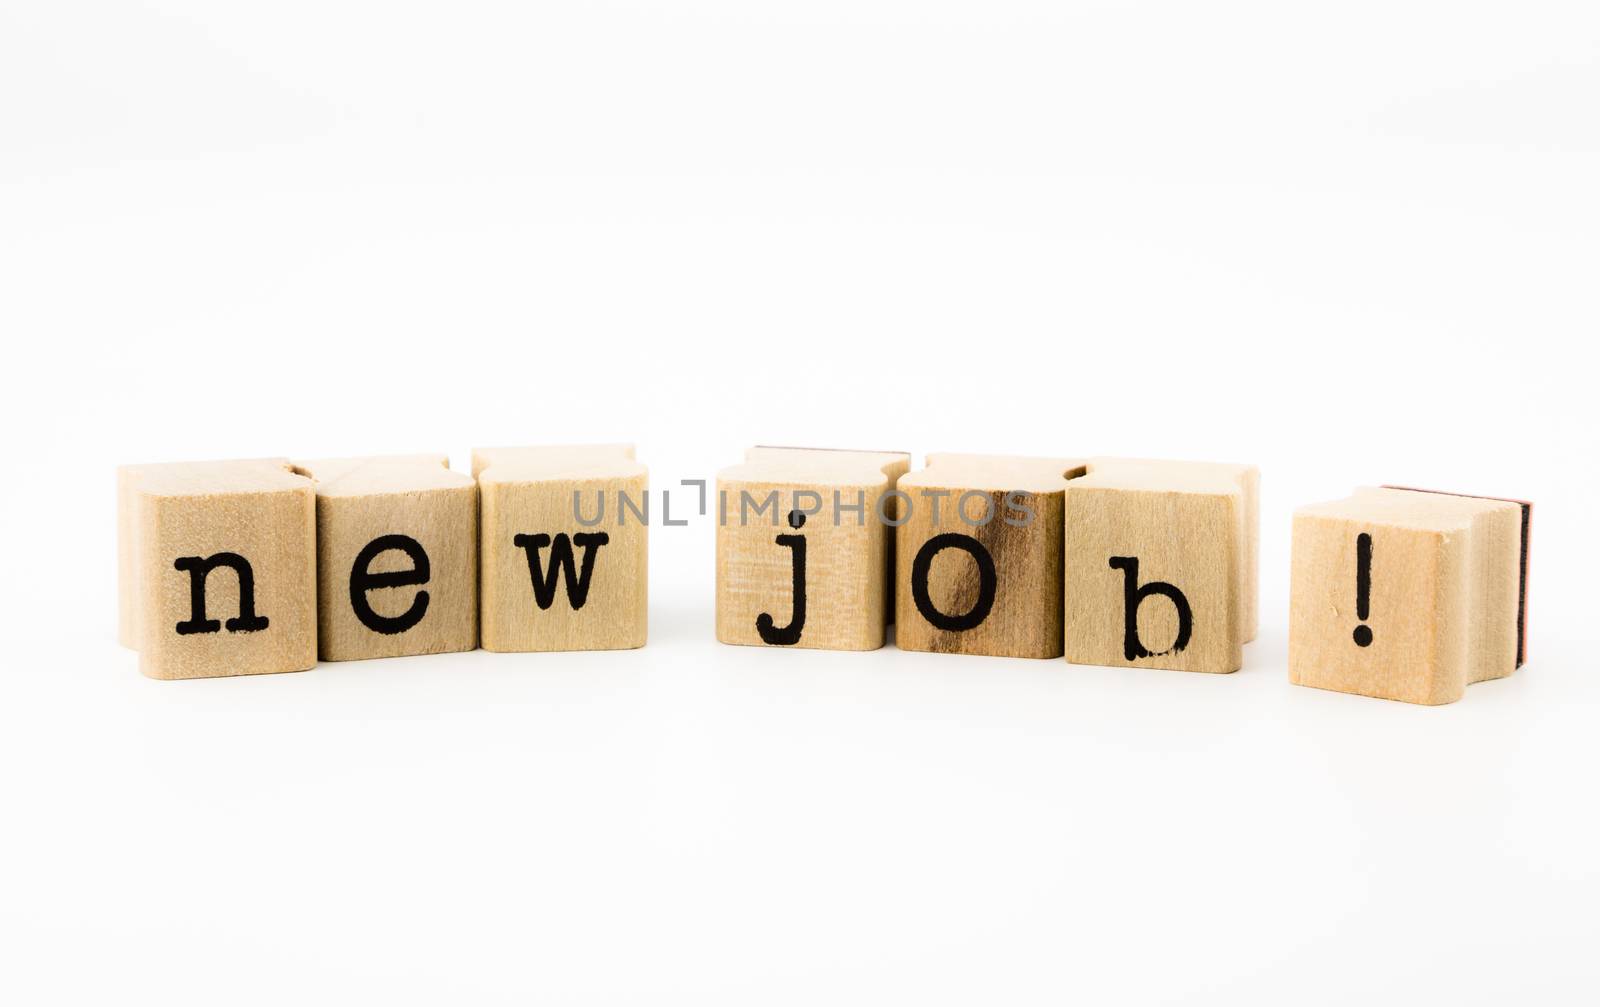 closeup new job wording, recruitment and human resource concept and idea